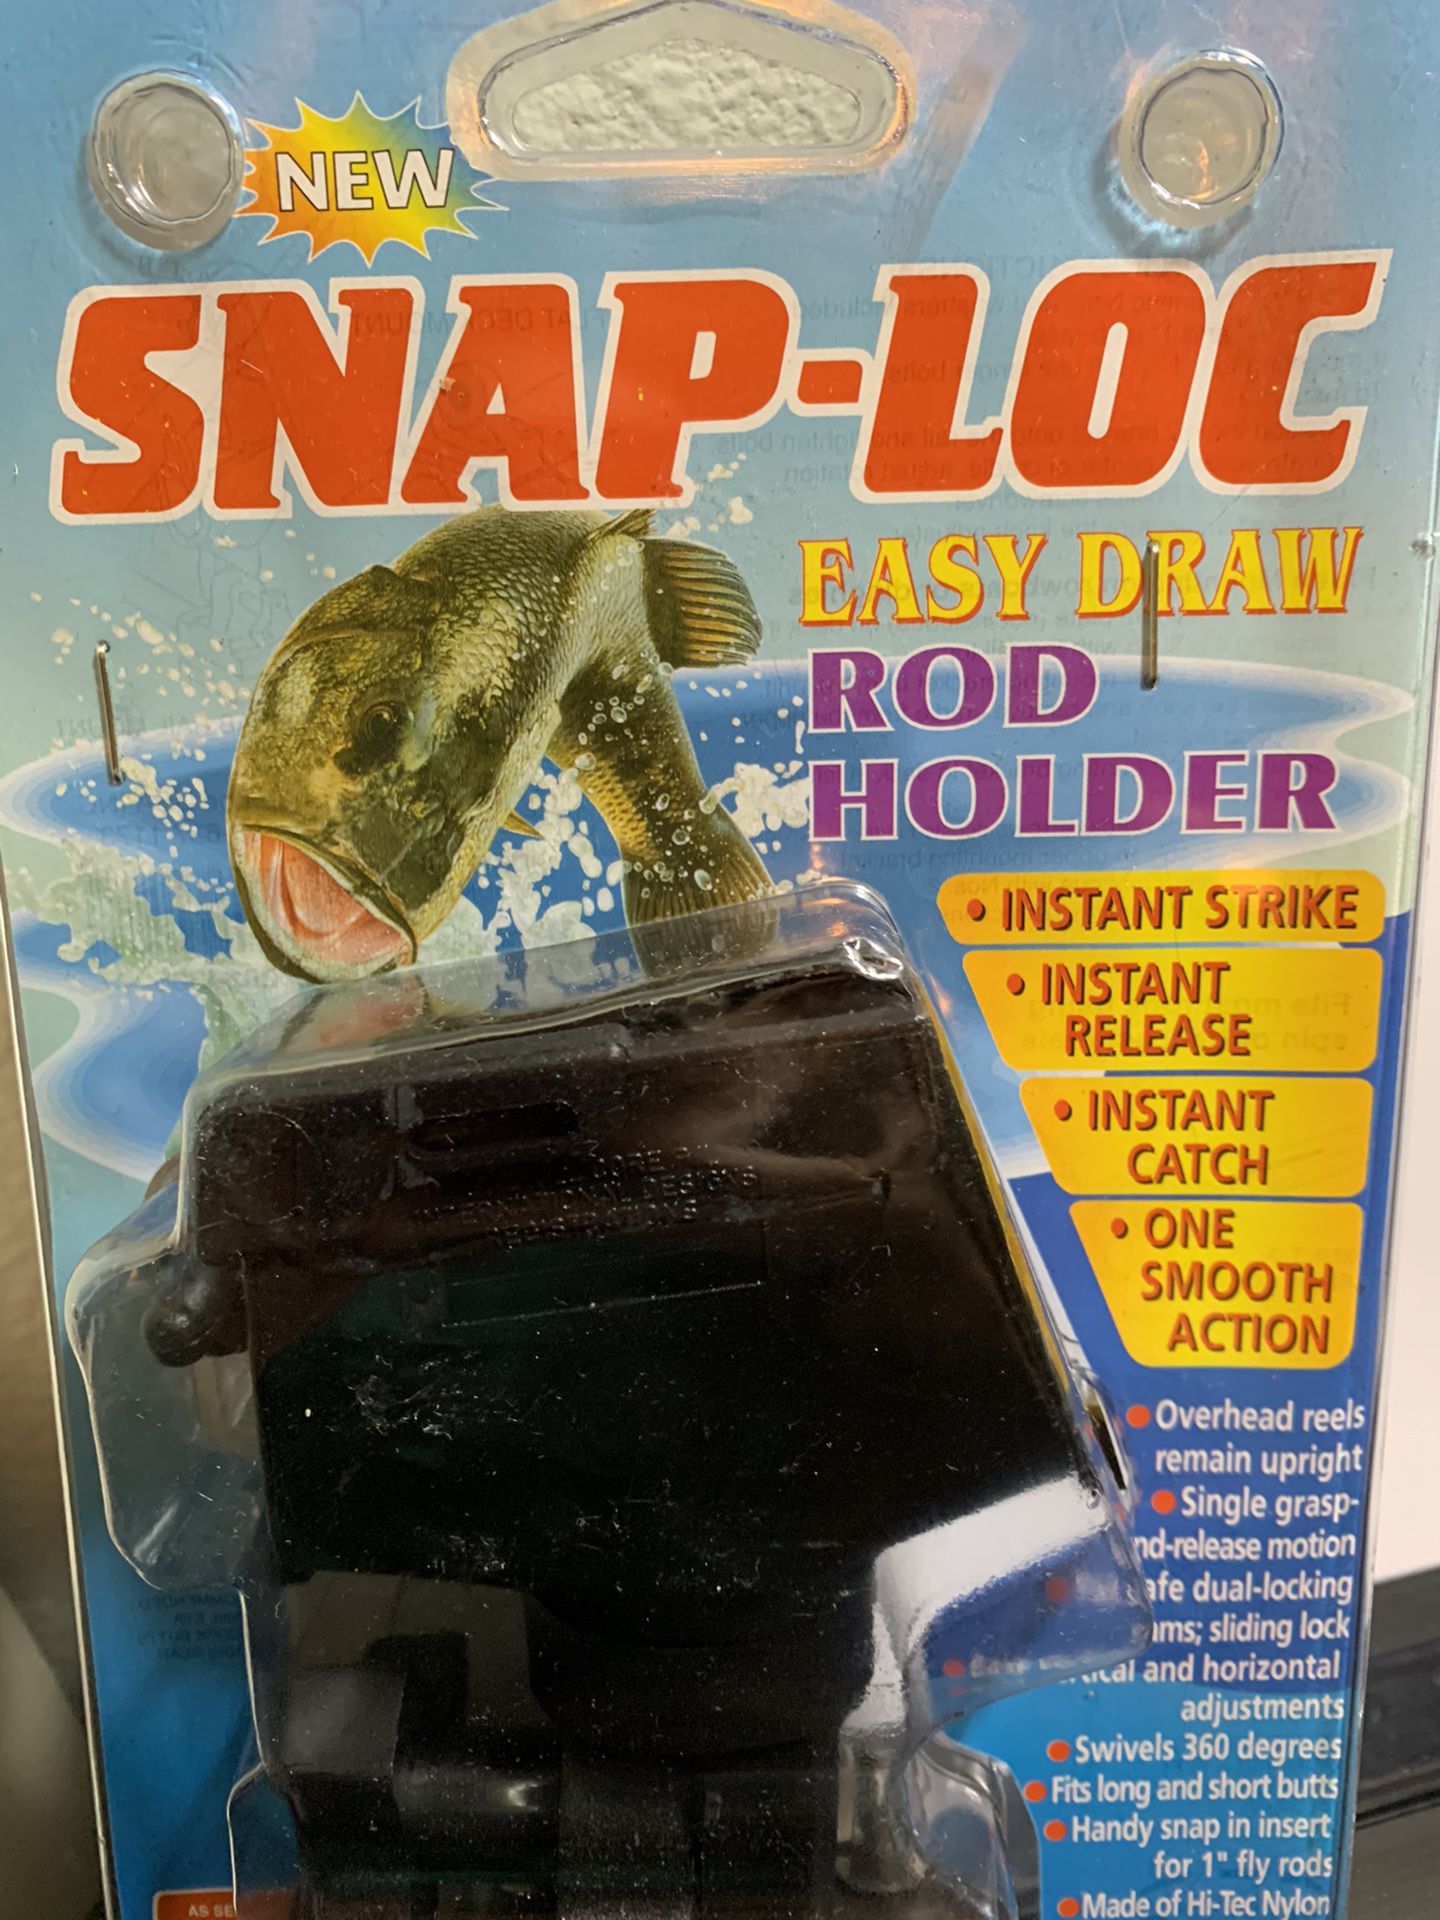 NEW Snap-Loc Pro Easy Draw Fishing Pole Rod Holder! New Gear